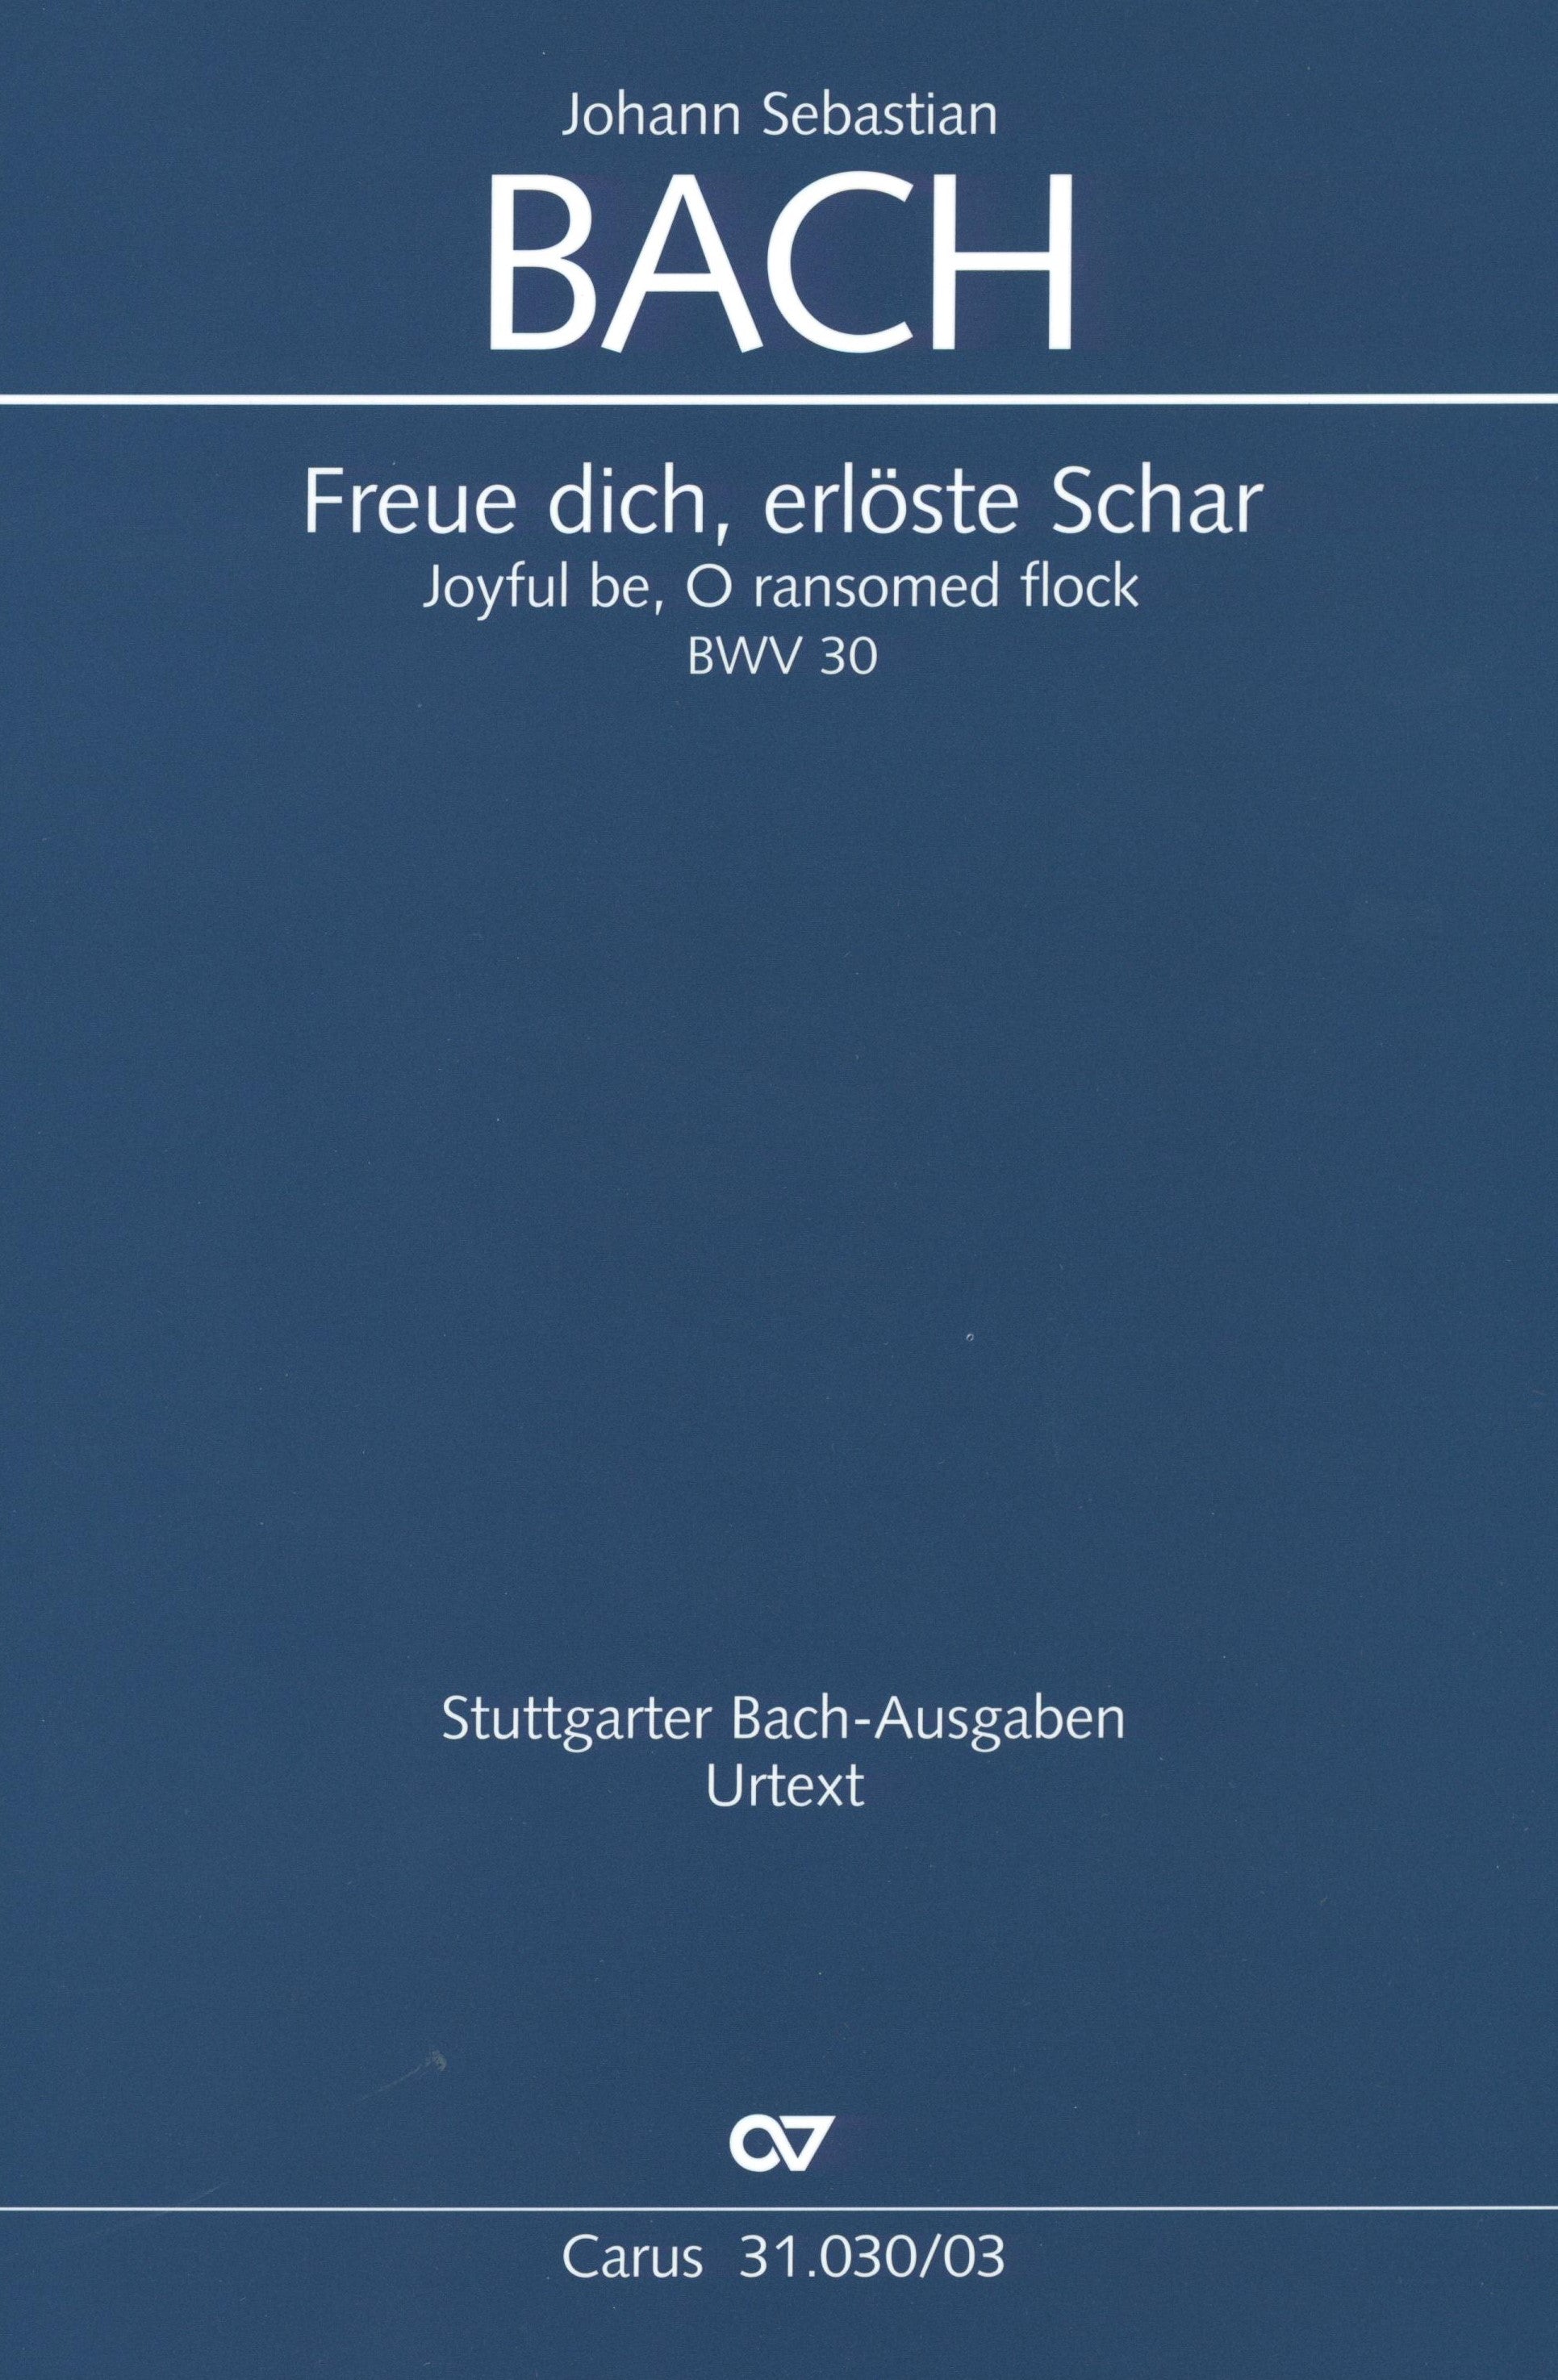 Bach: Freue dich, erlöste Schar, BWV 30